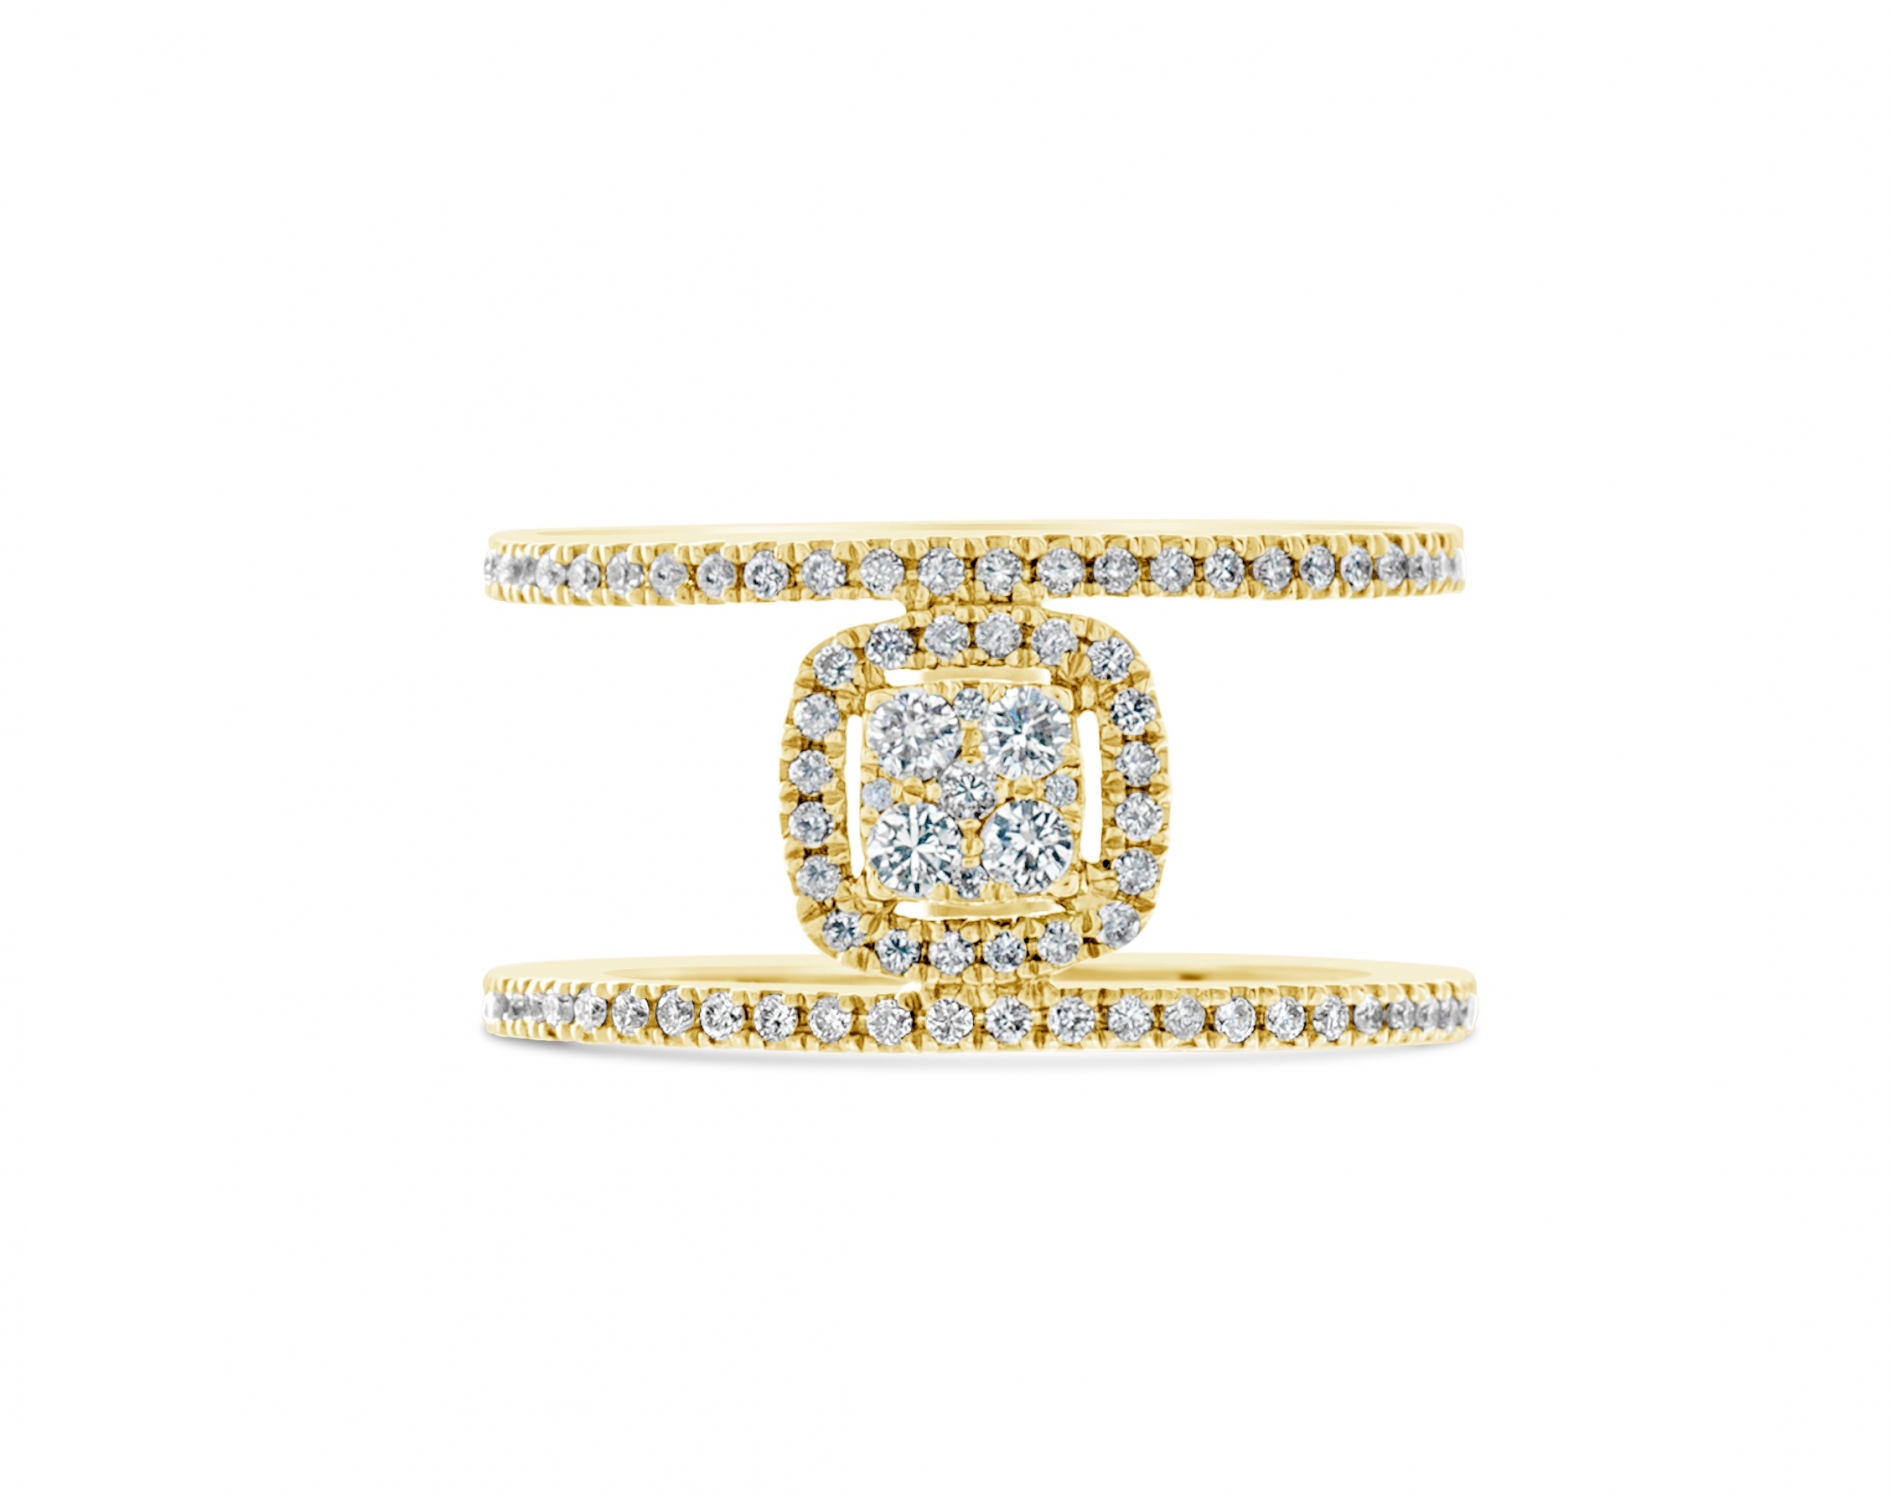 18k yellow gold halo illusion set round shaped diamond engagement ring